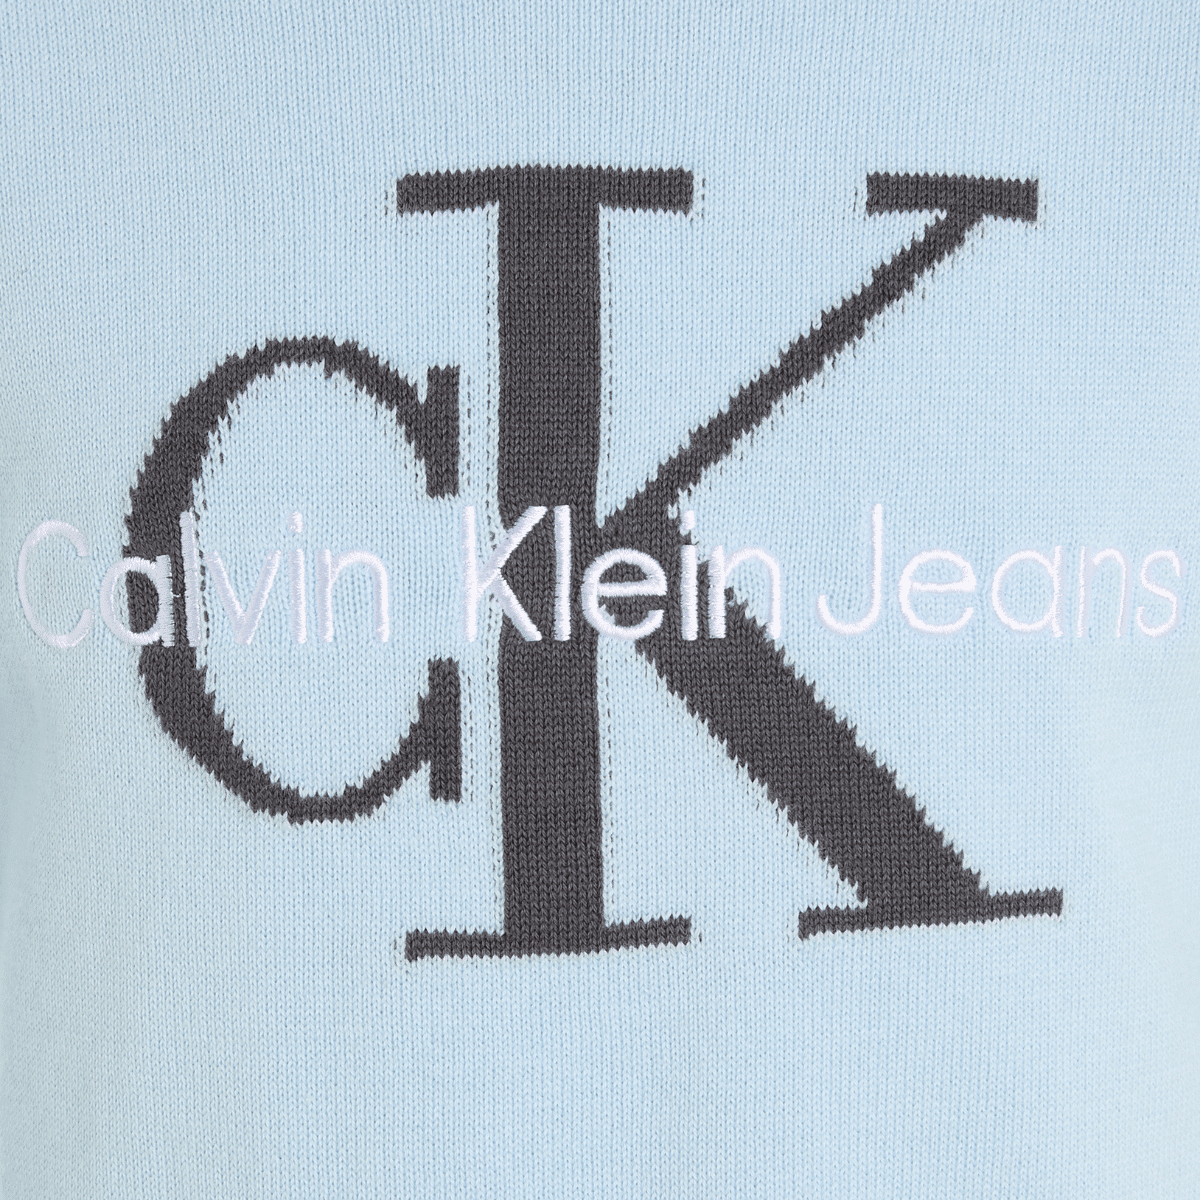 calvin klein childrens jeans logo close up on pale blue jumper